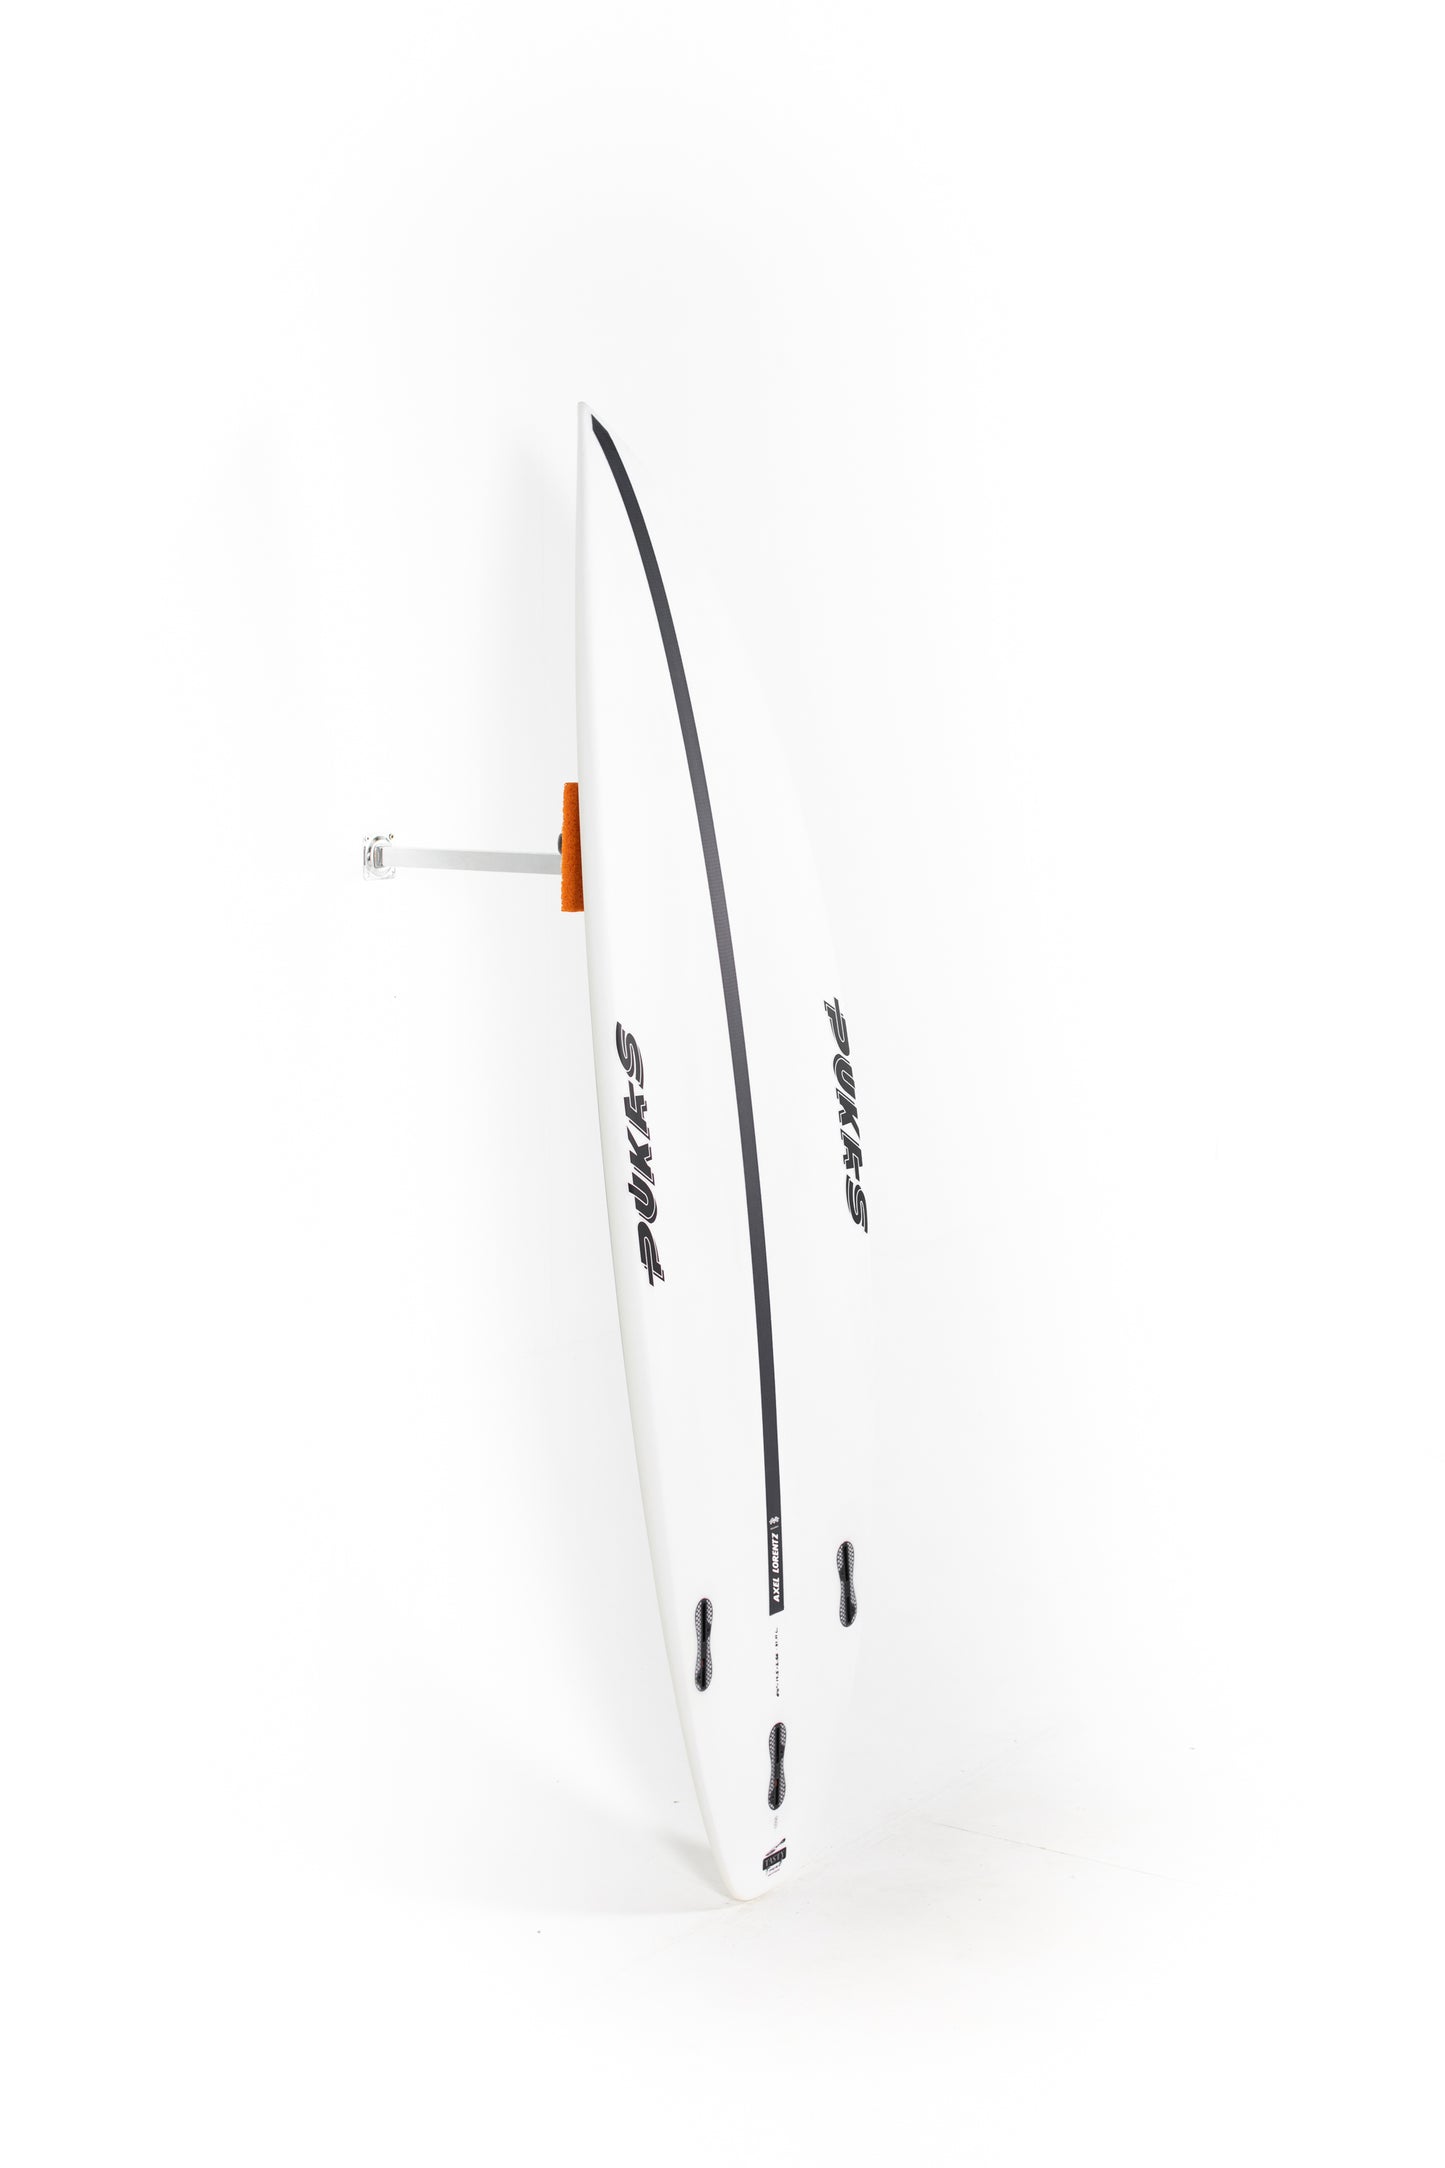 
                  
                    Pukas Surf Shop - Pukas Surfboard - INNCA Tech - TASTY TREAT by Axel Lorentz- 6’0” x 19,5 x 2,56 x 31,71L
                  
                